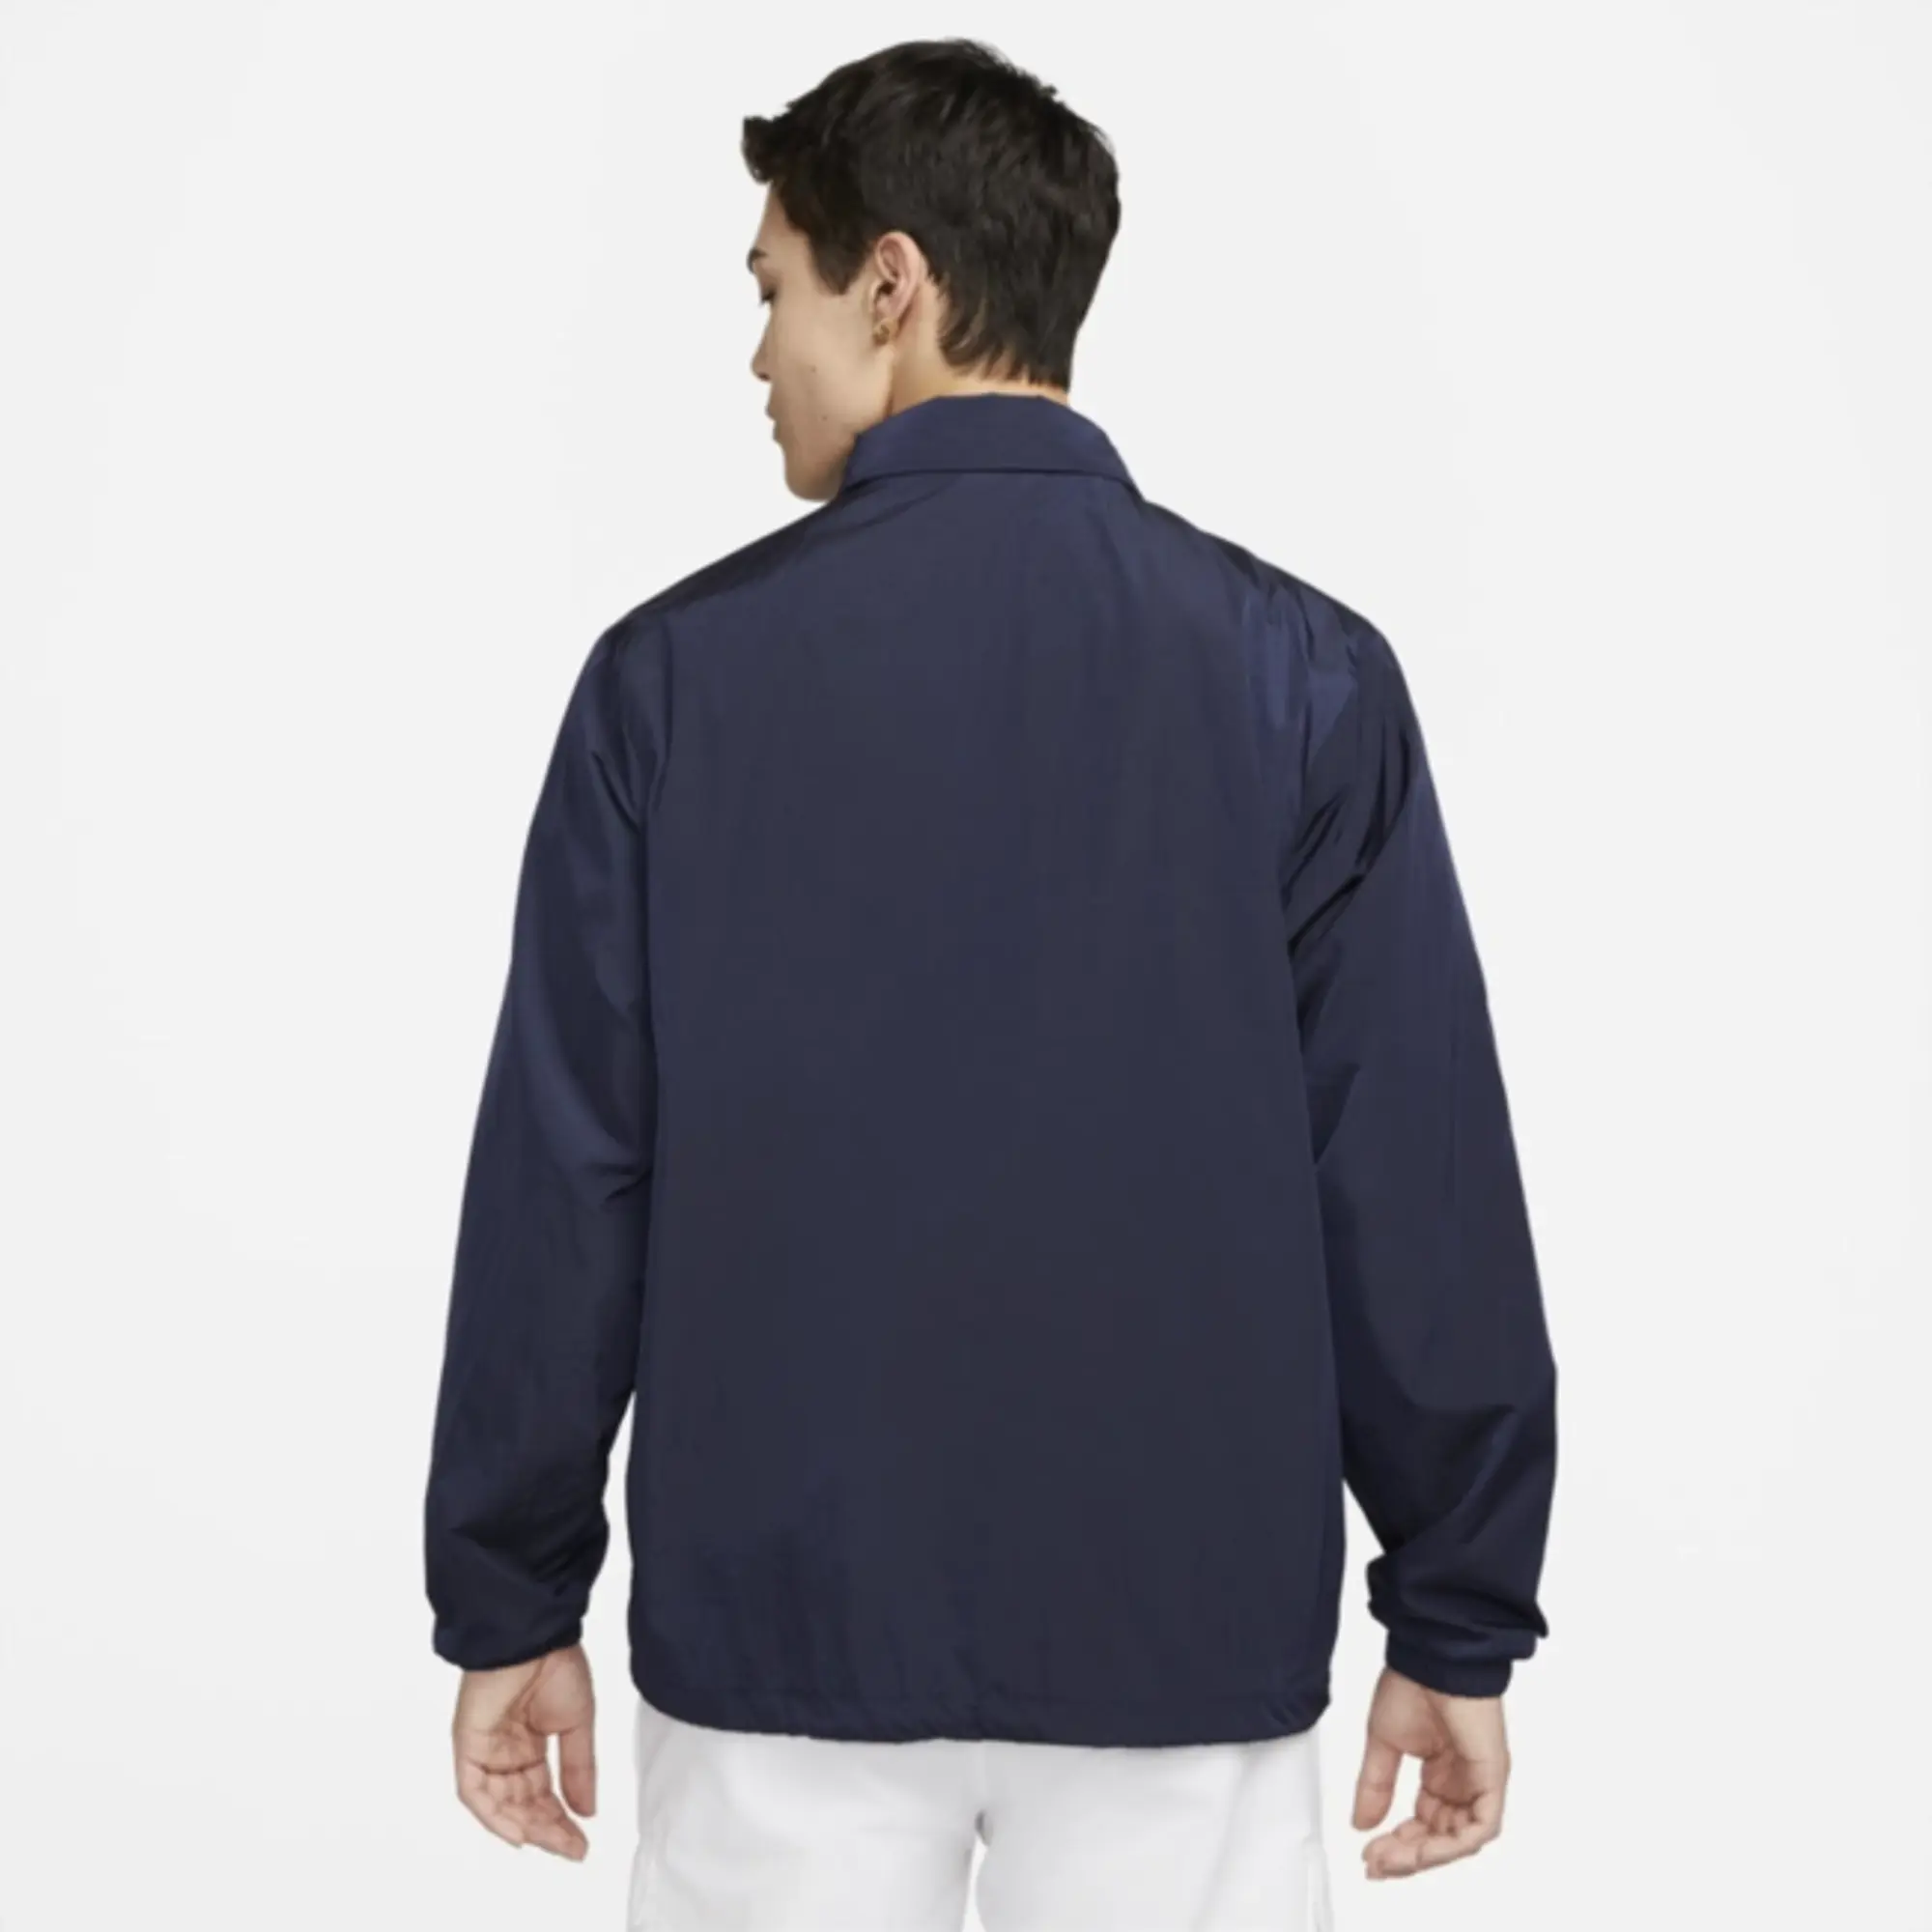 Nike Life Premium Coach Jacket In Midnight Navy-Blue | DQ5005-410 ...